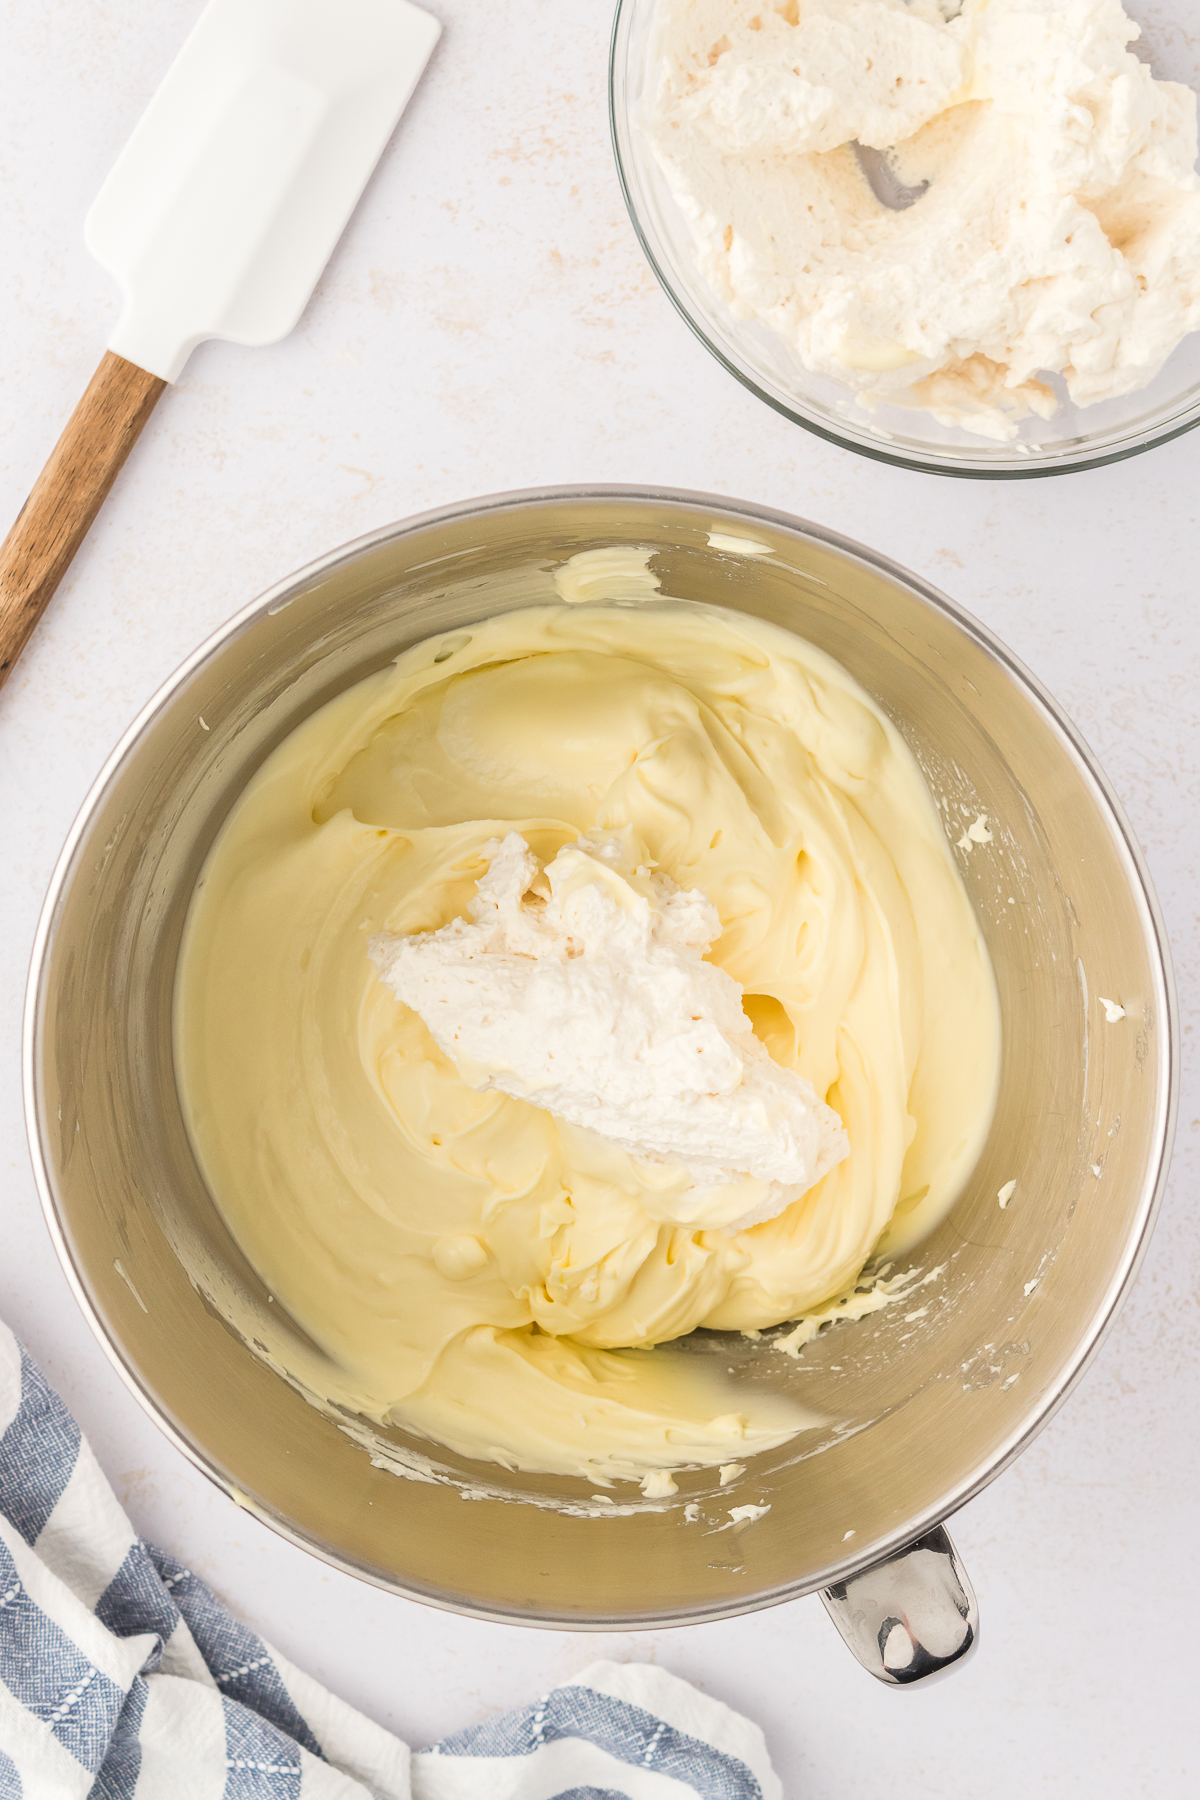 whipped cream added to mascarpone mixture